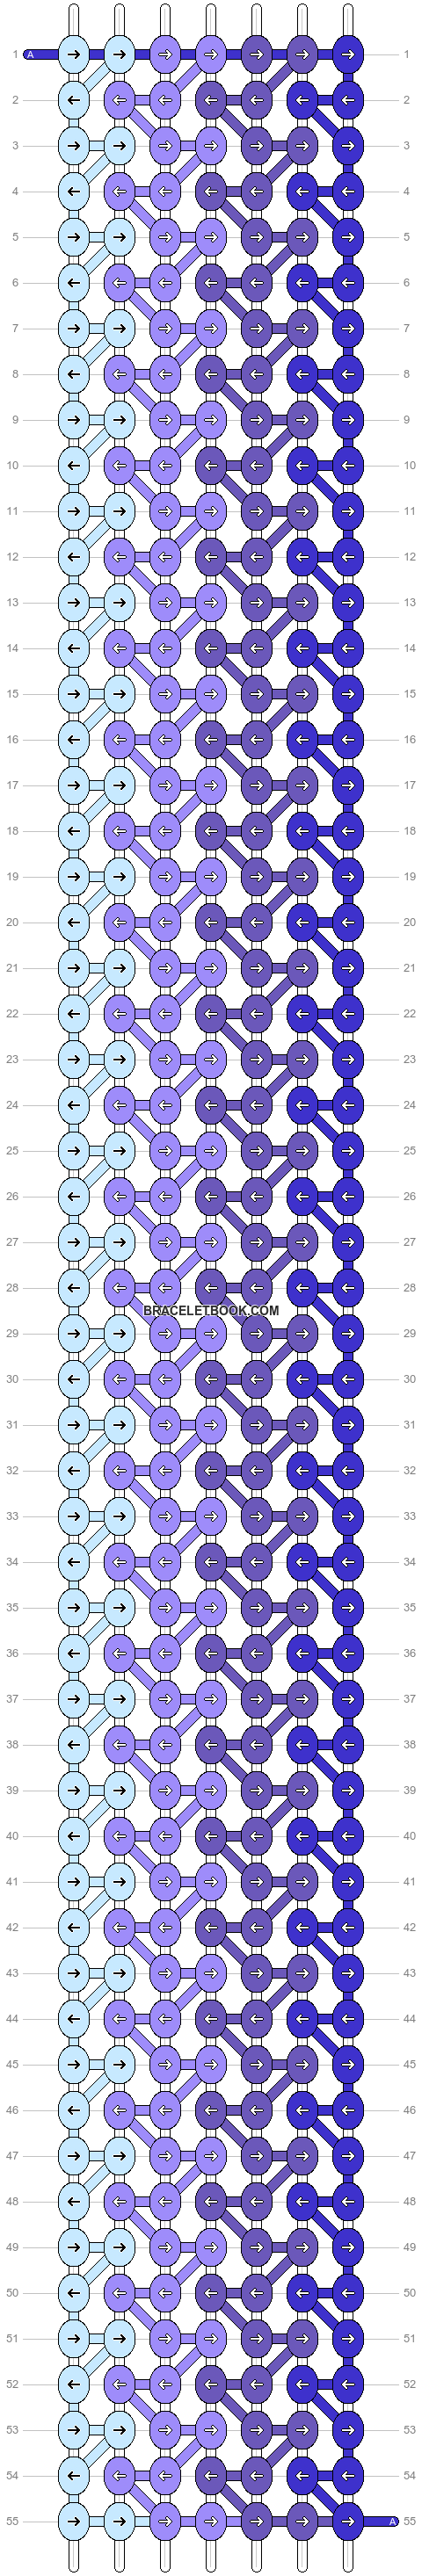 Alpha pattern #15230 variation #104372 pattern